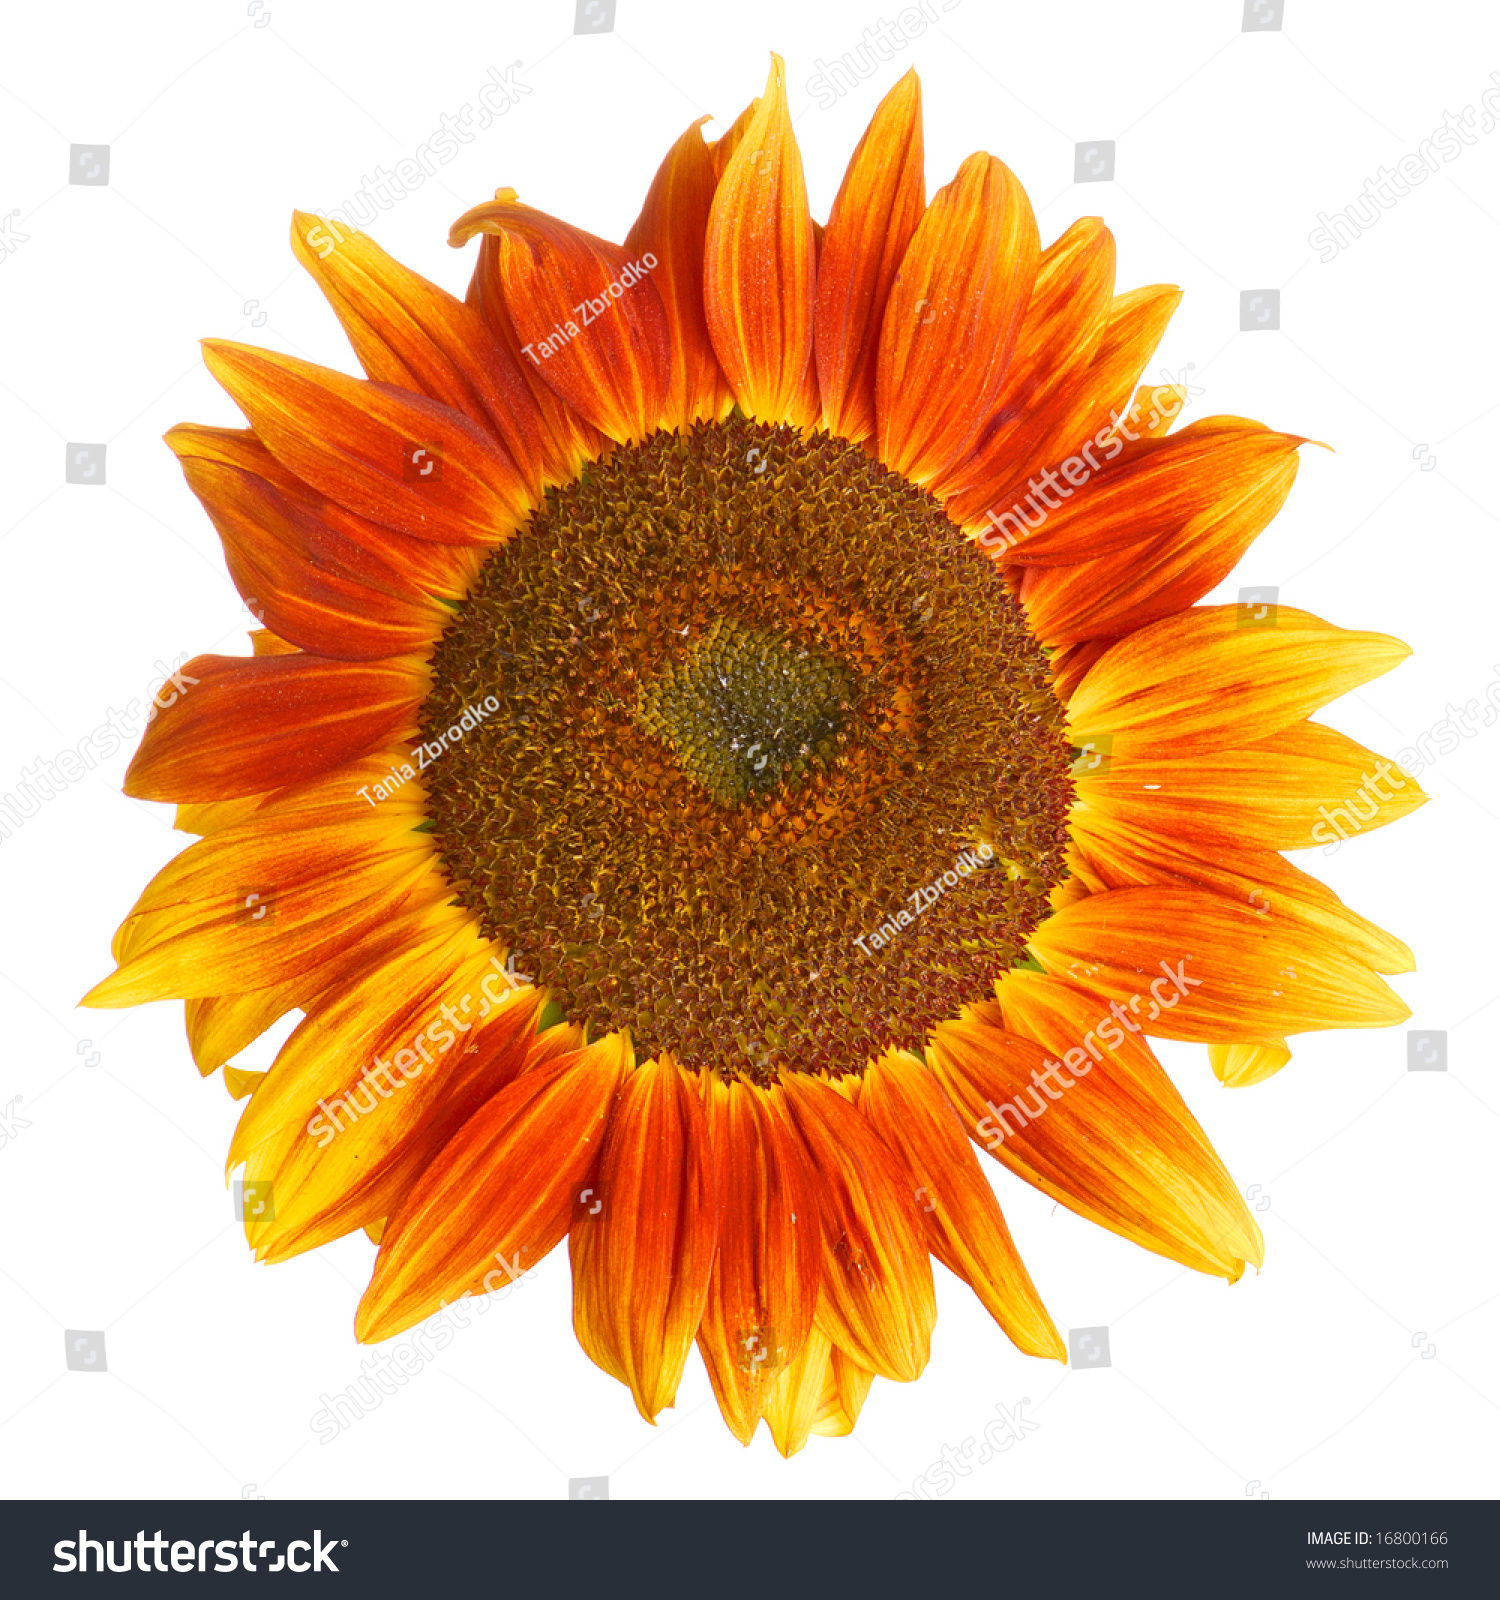 Single Sunflower Isolated On White Background. Stock Photo 16800166 : Shutterstock